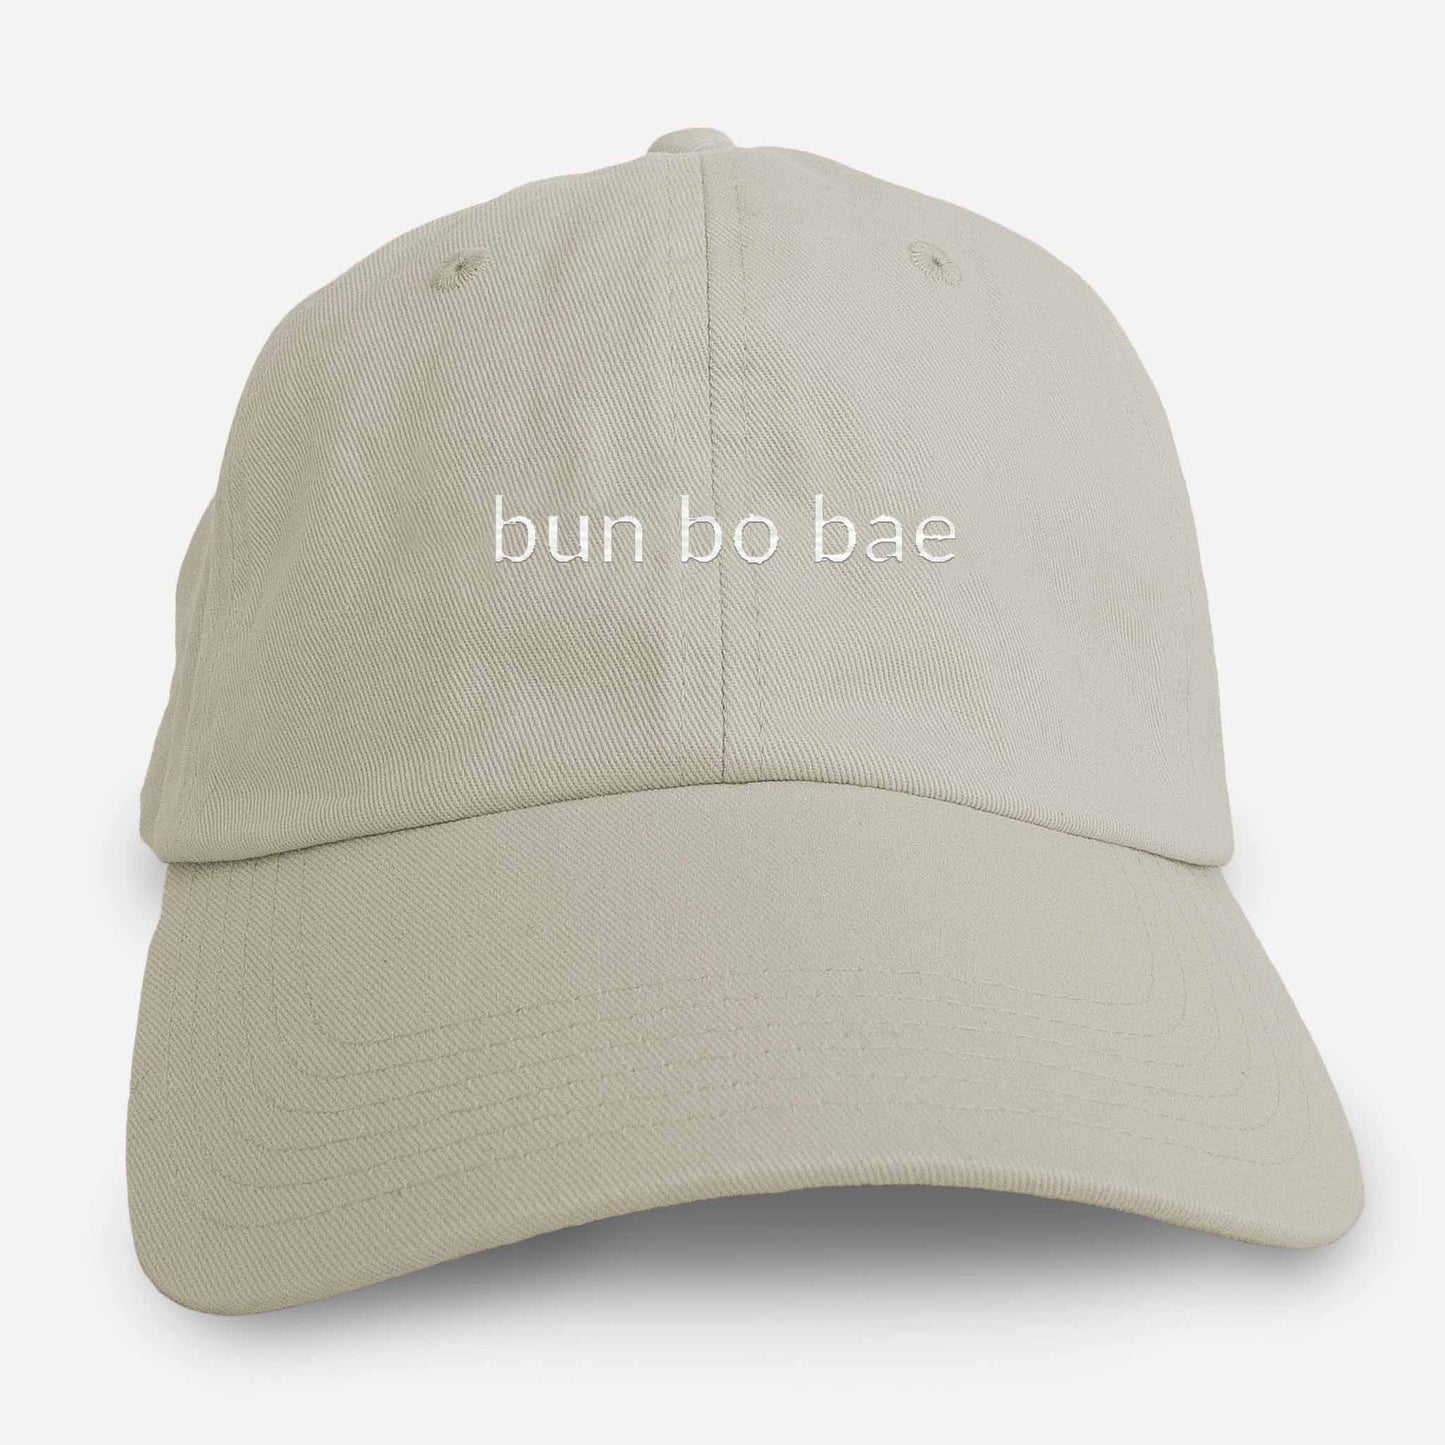 bun bo bae Hat Adult - Asian Baby Clothing